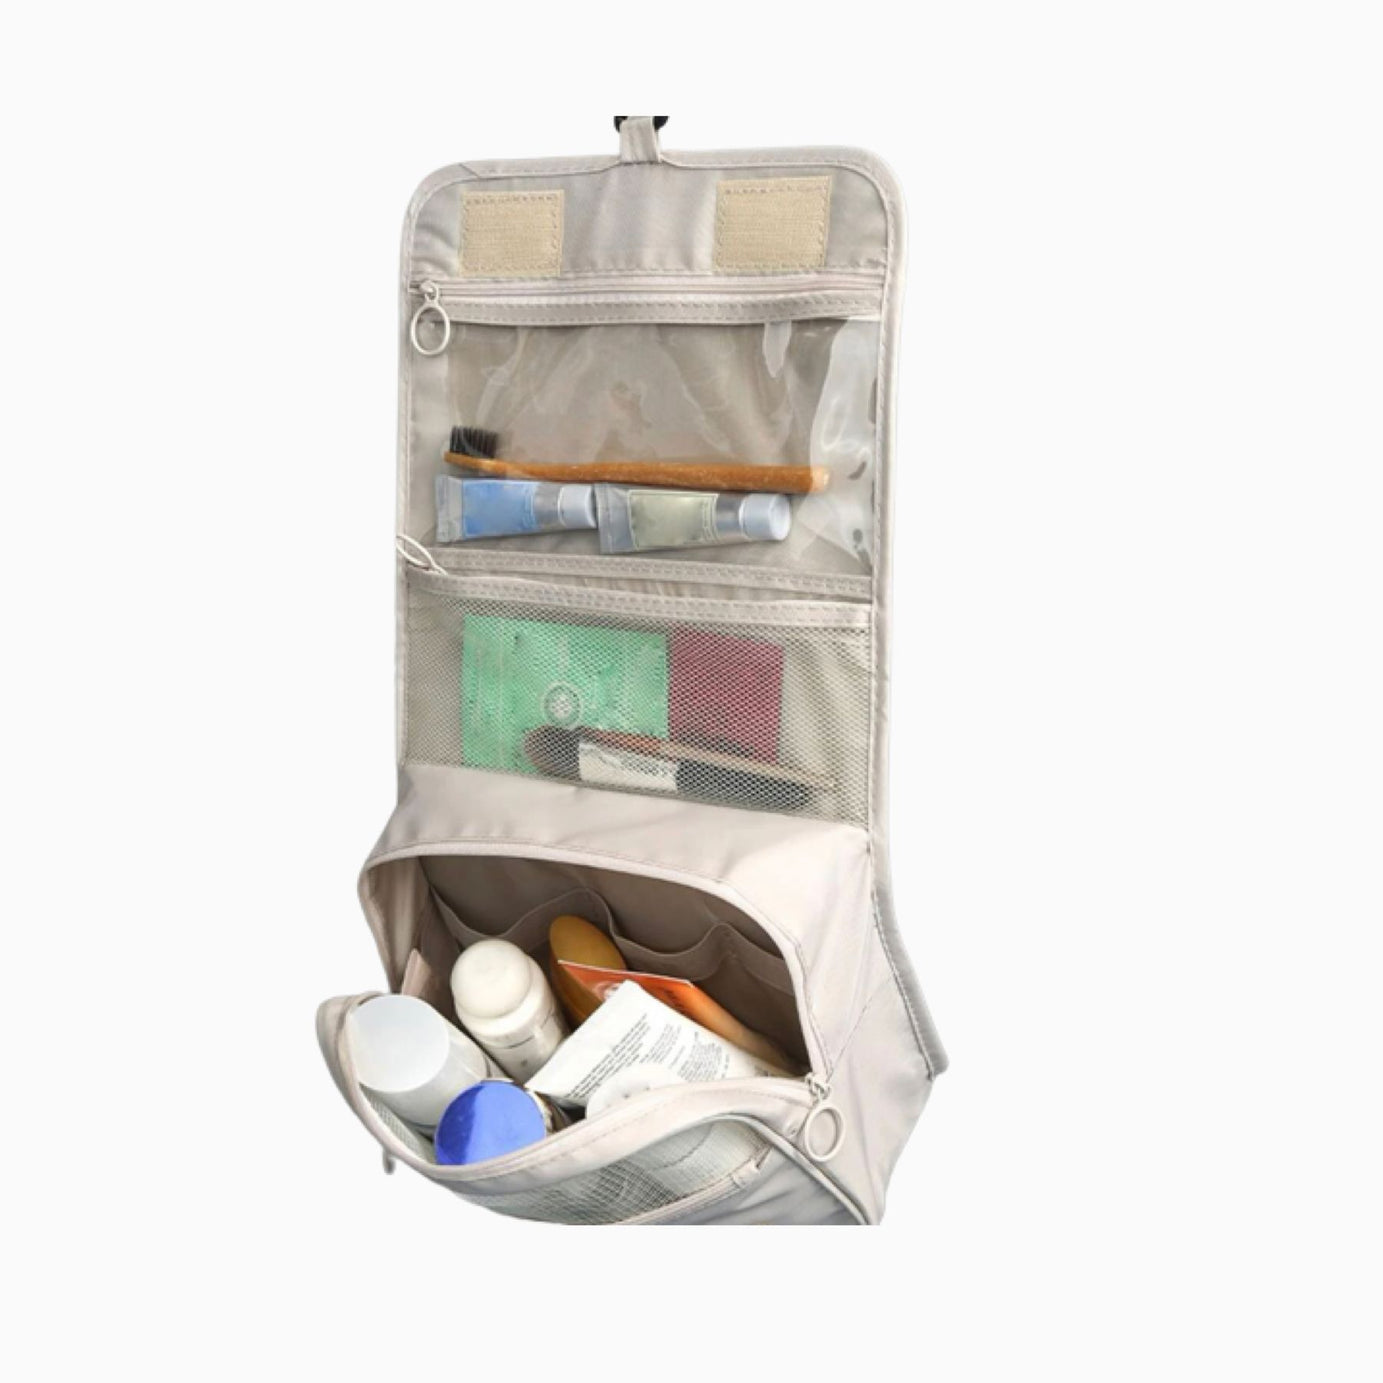 bag to arrange travel items